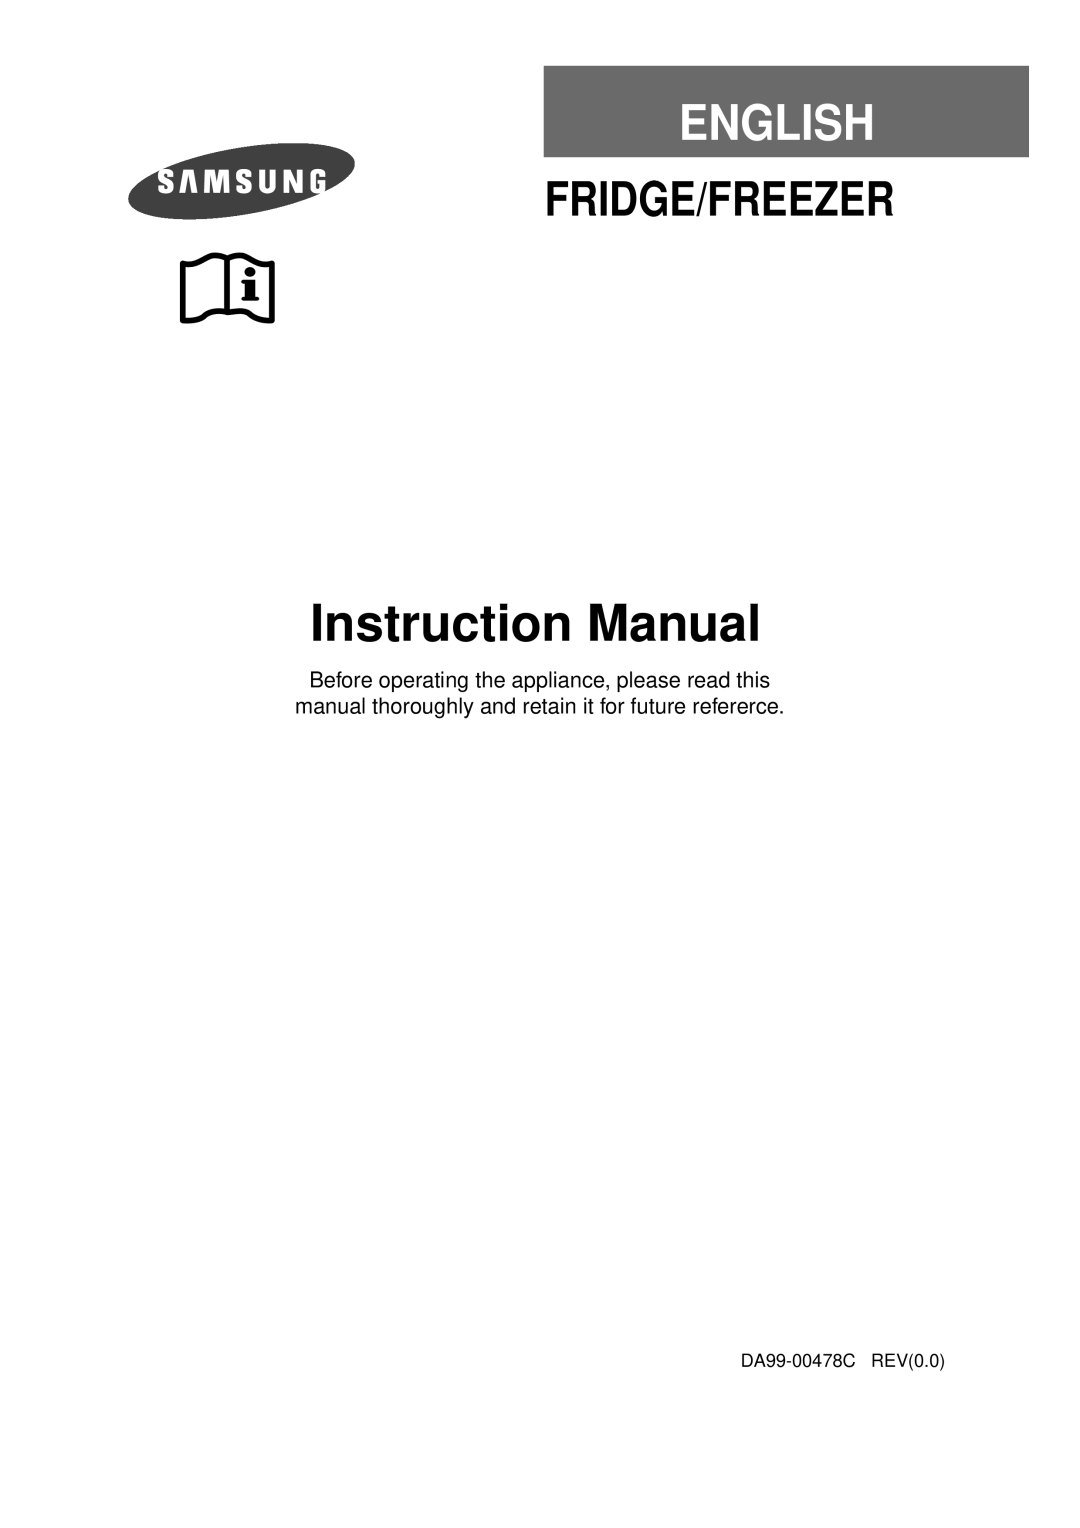 Samsung instruction manual Instruction Manual, English, Fridge/Freezer, DA99-00478CREV0.0 